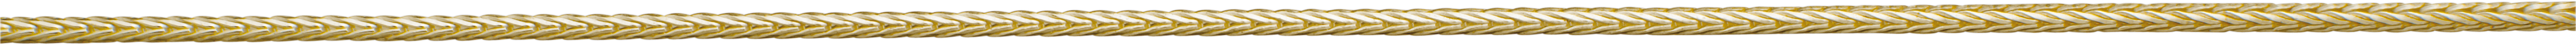 Fox tail chain gold 585/-Gg Ø 1,15mm